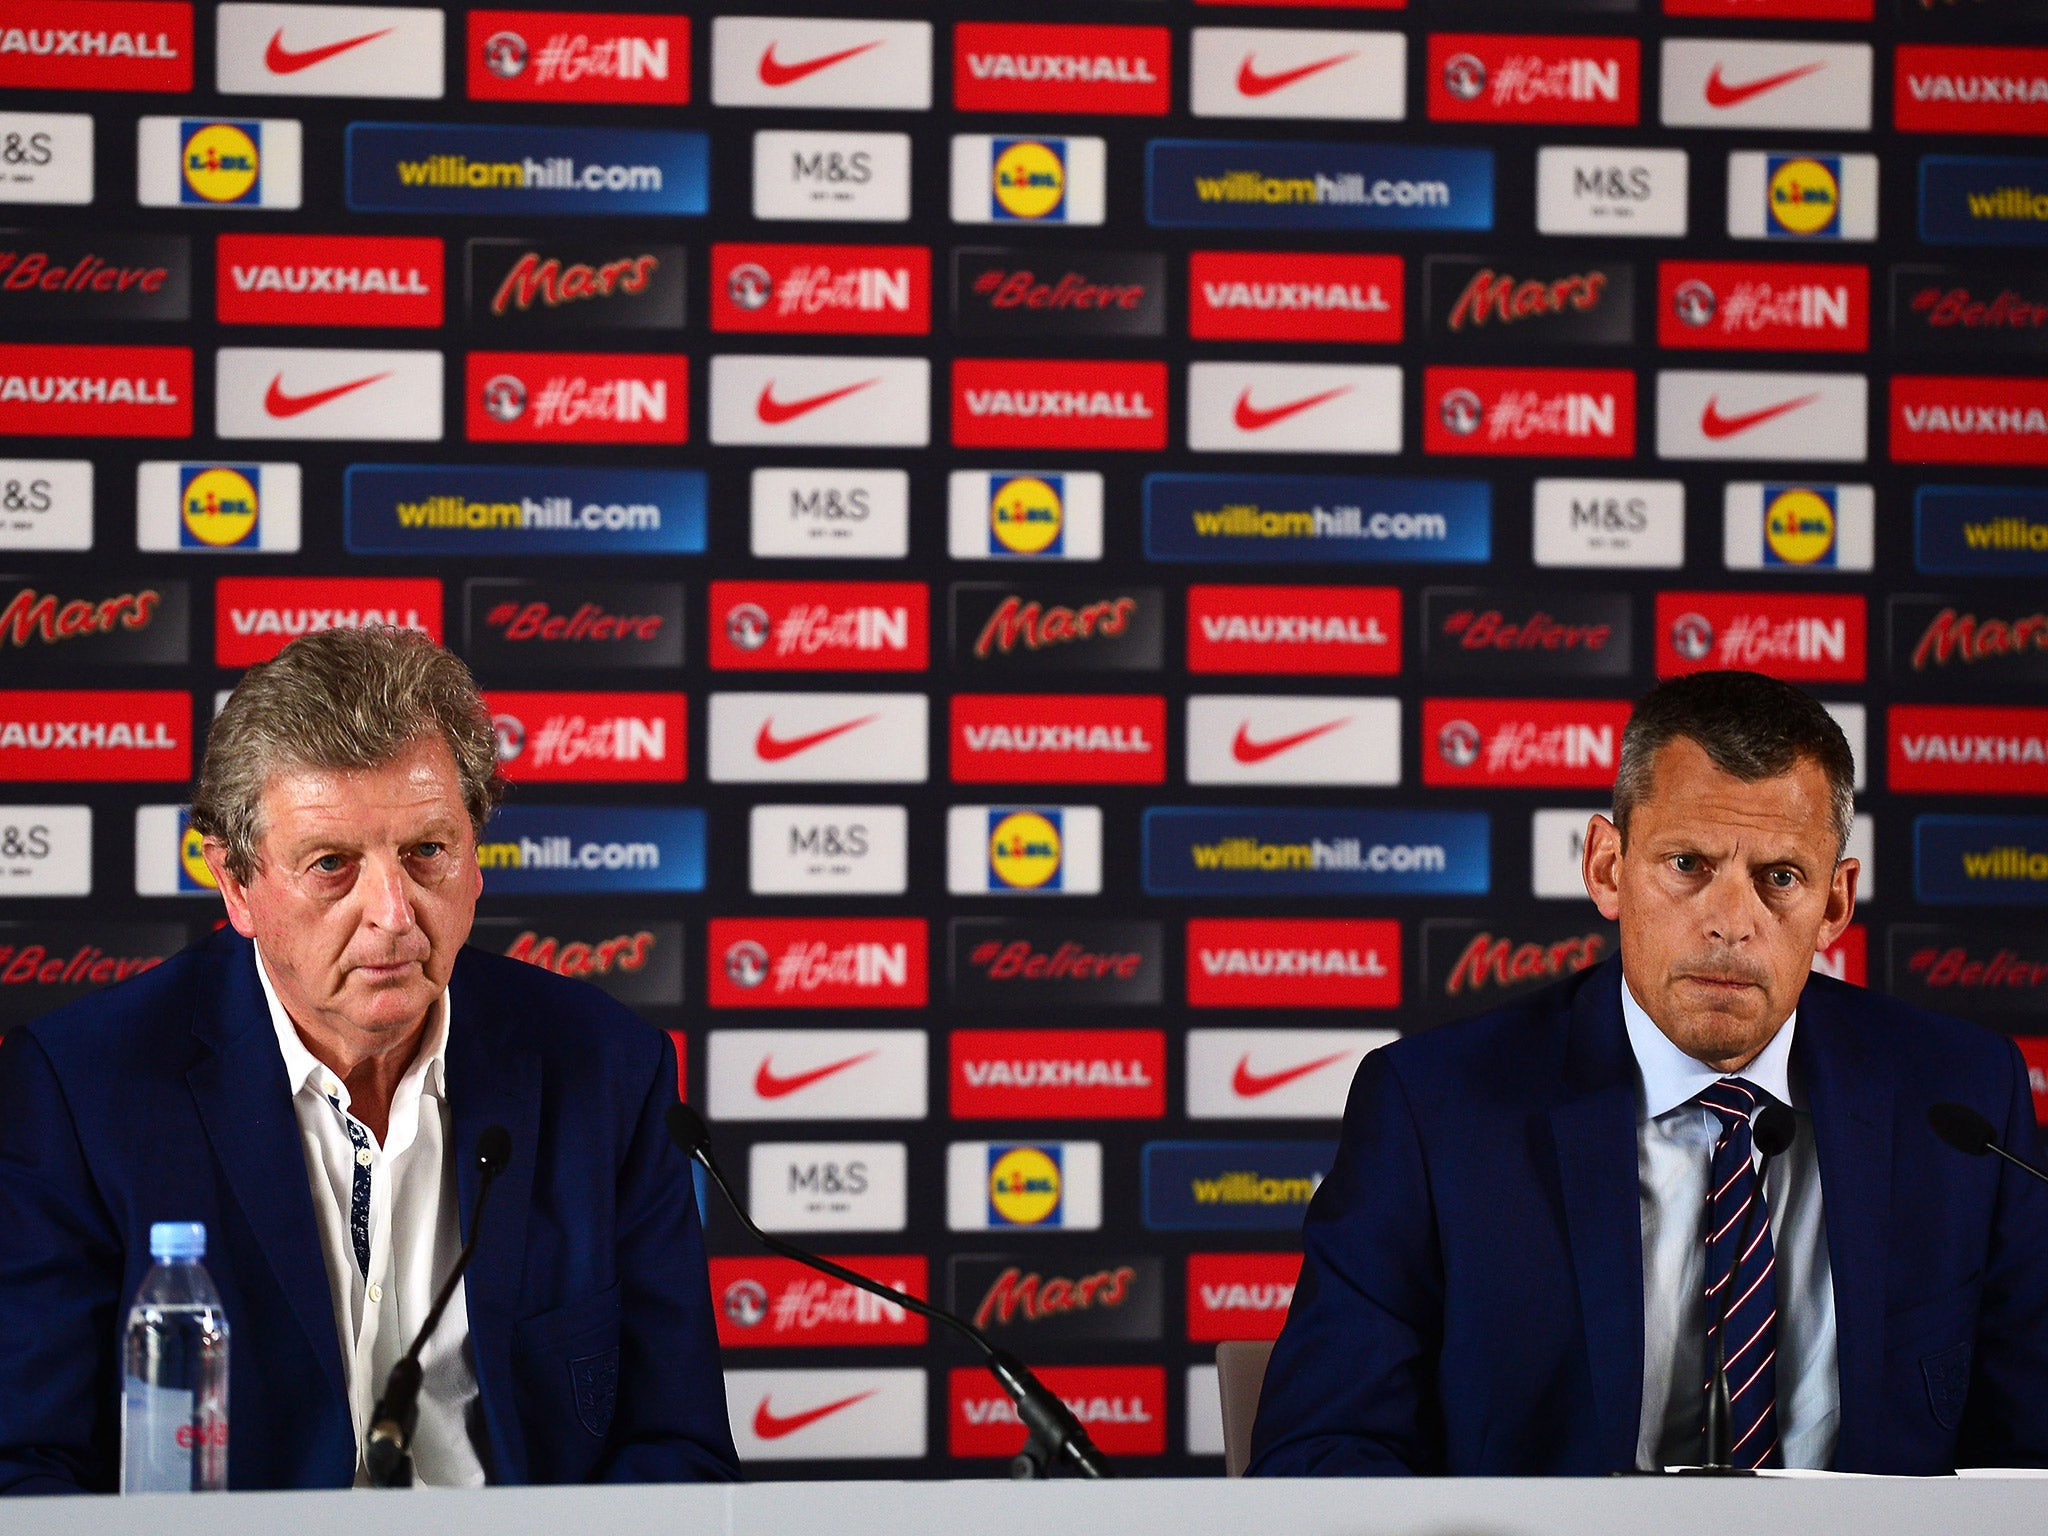 Roy Hodgson appeared at the press conference alongside FA chief executive Martin Glenn